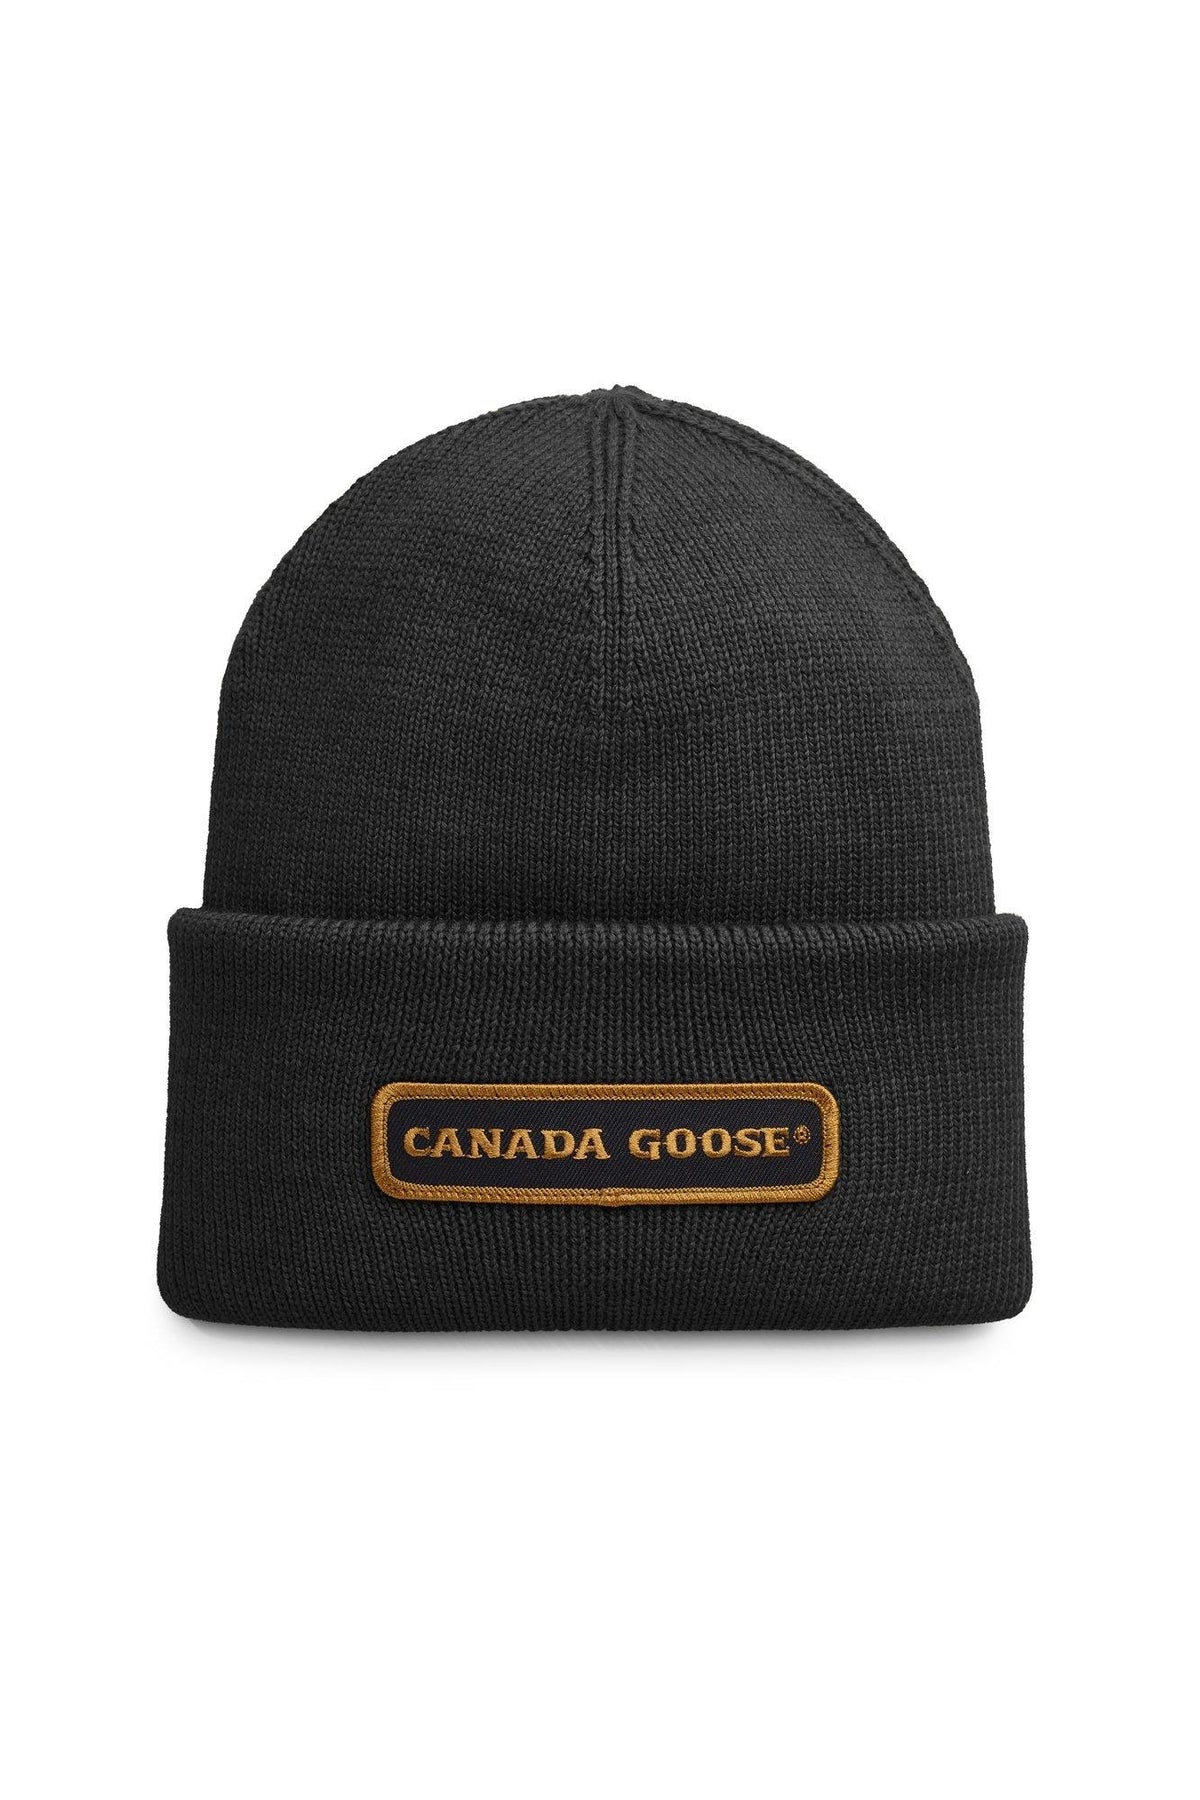 Canada Goose Mens Winter Accessories Emblem Rib Toque - Black - Due West